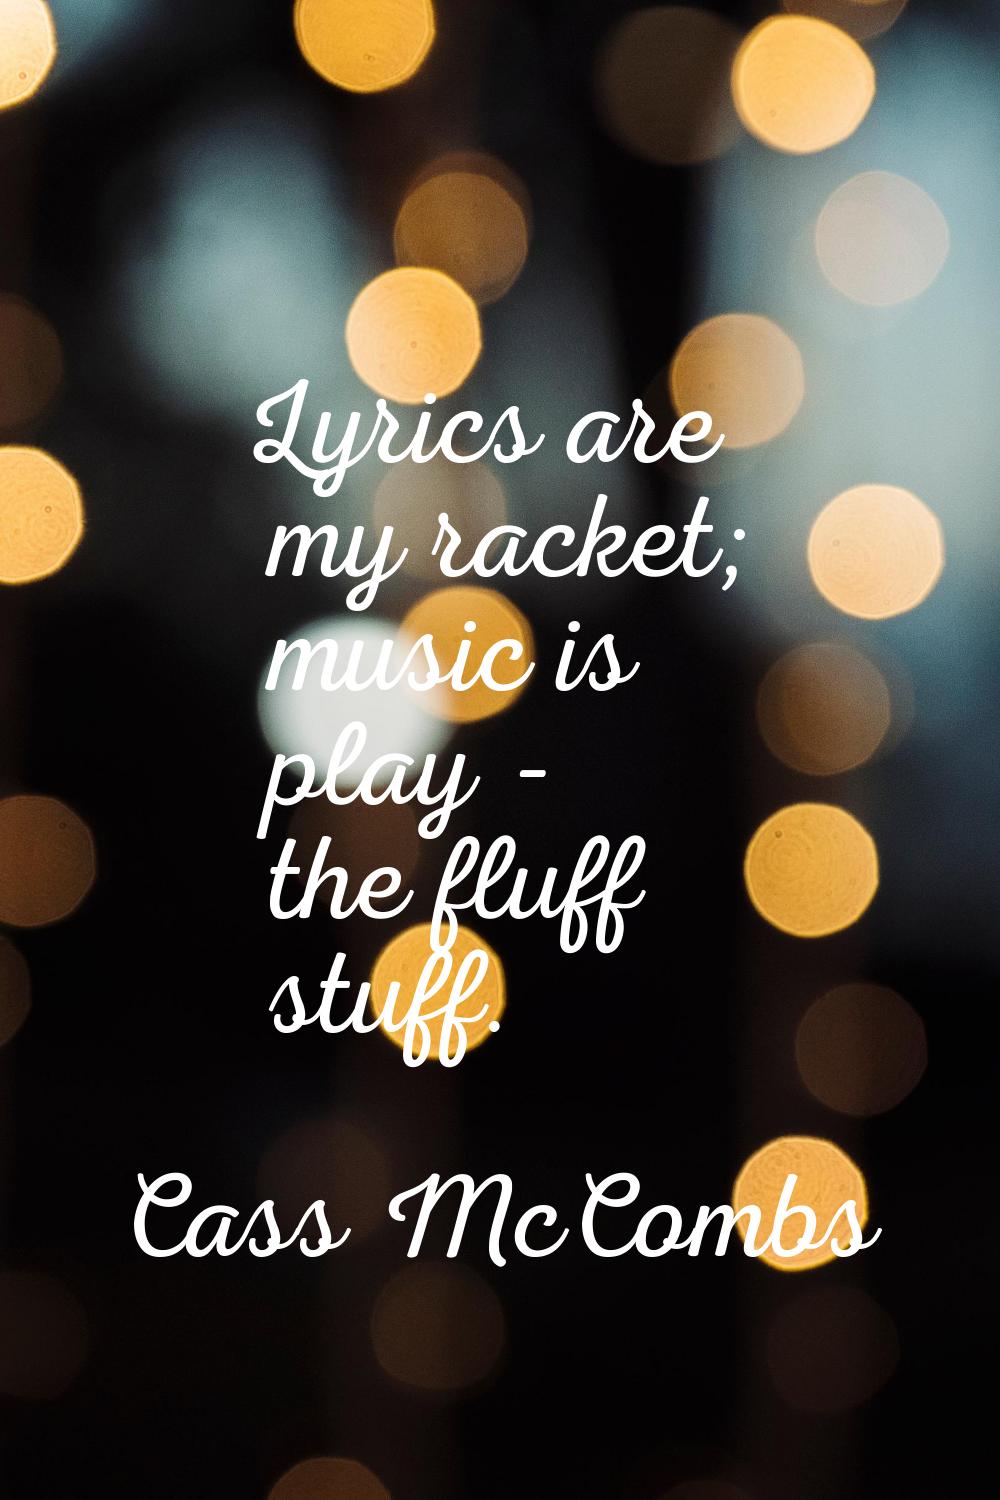 Lyrics are my racket; music is play - the fluff stuff.